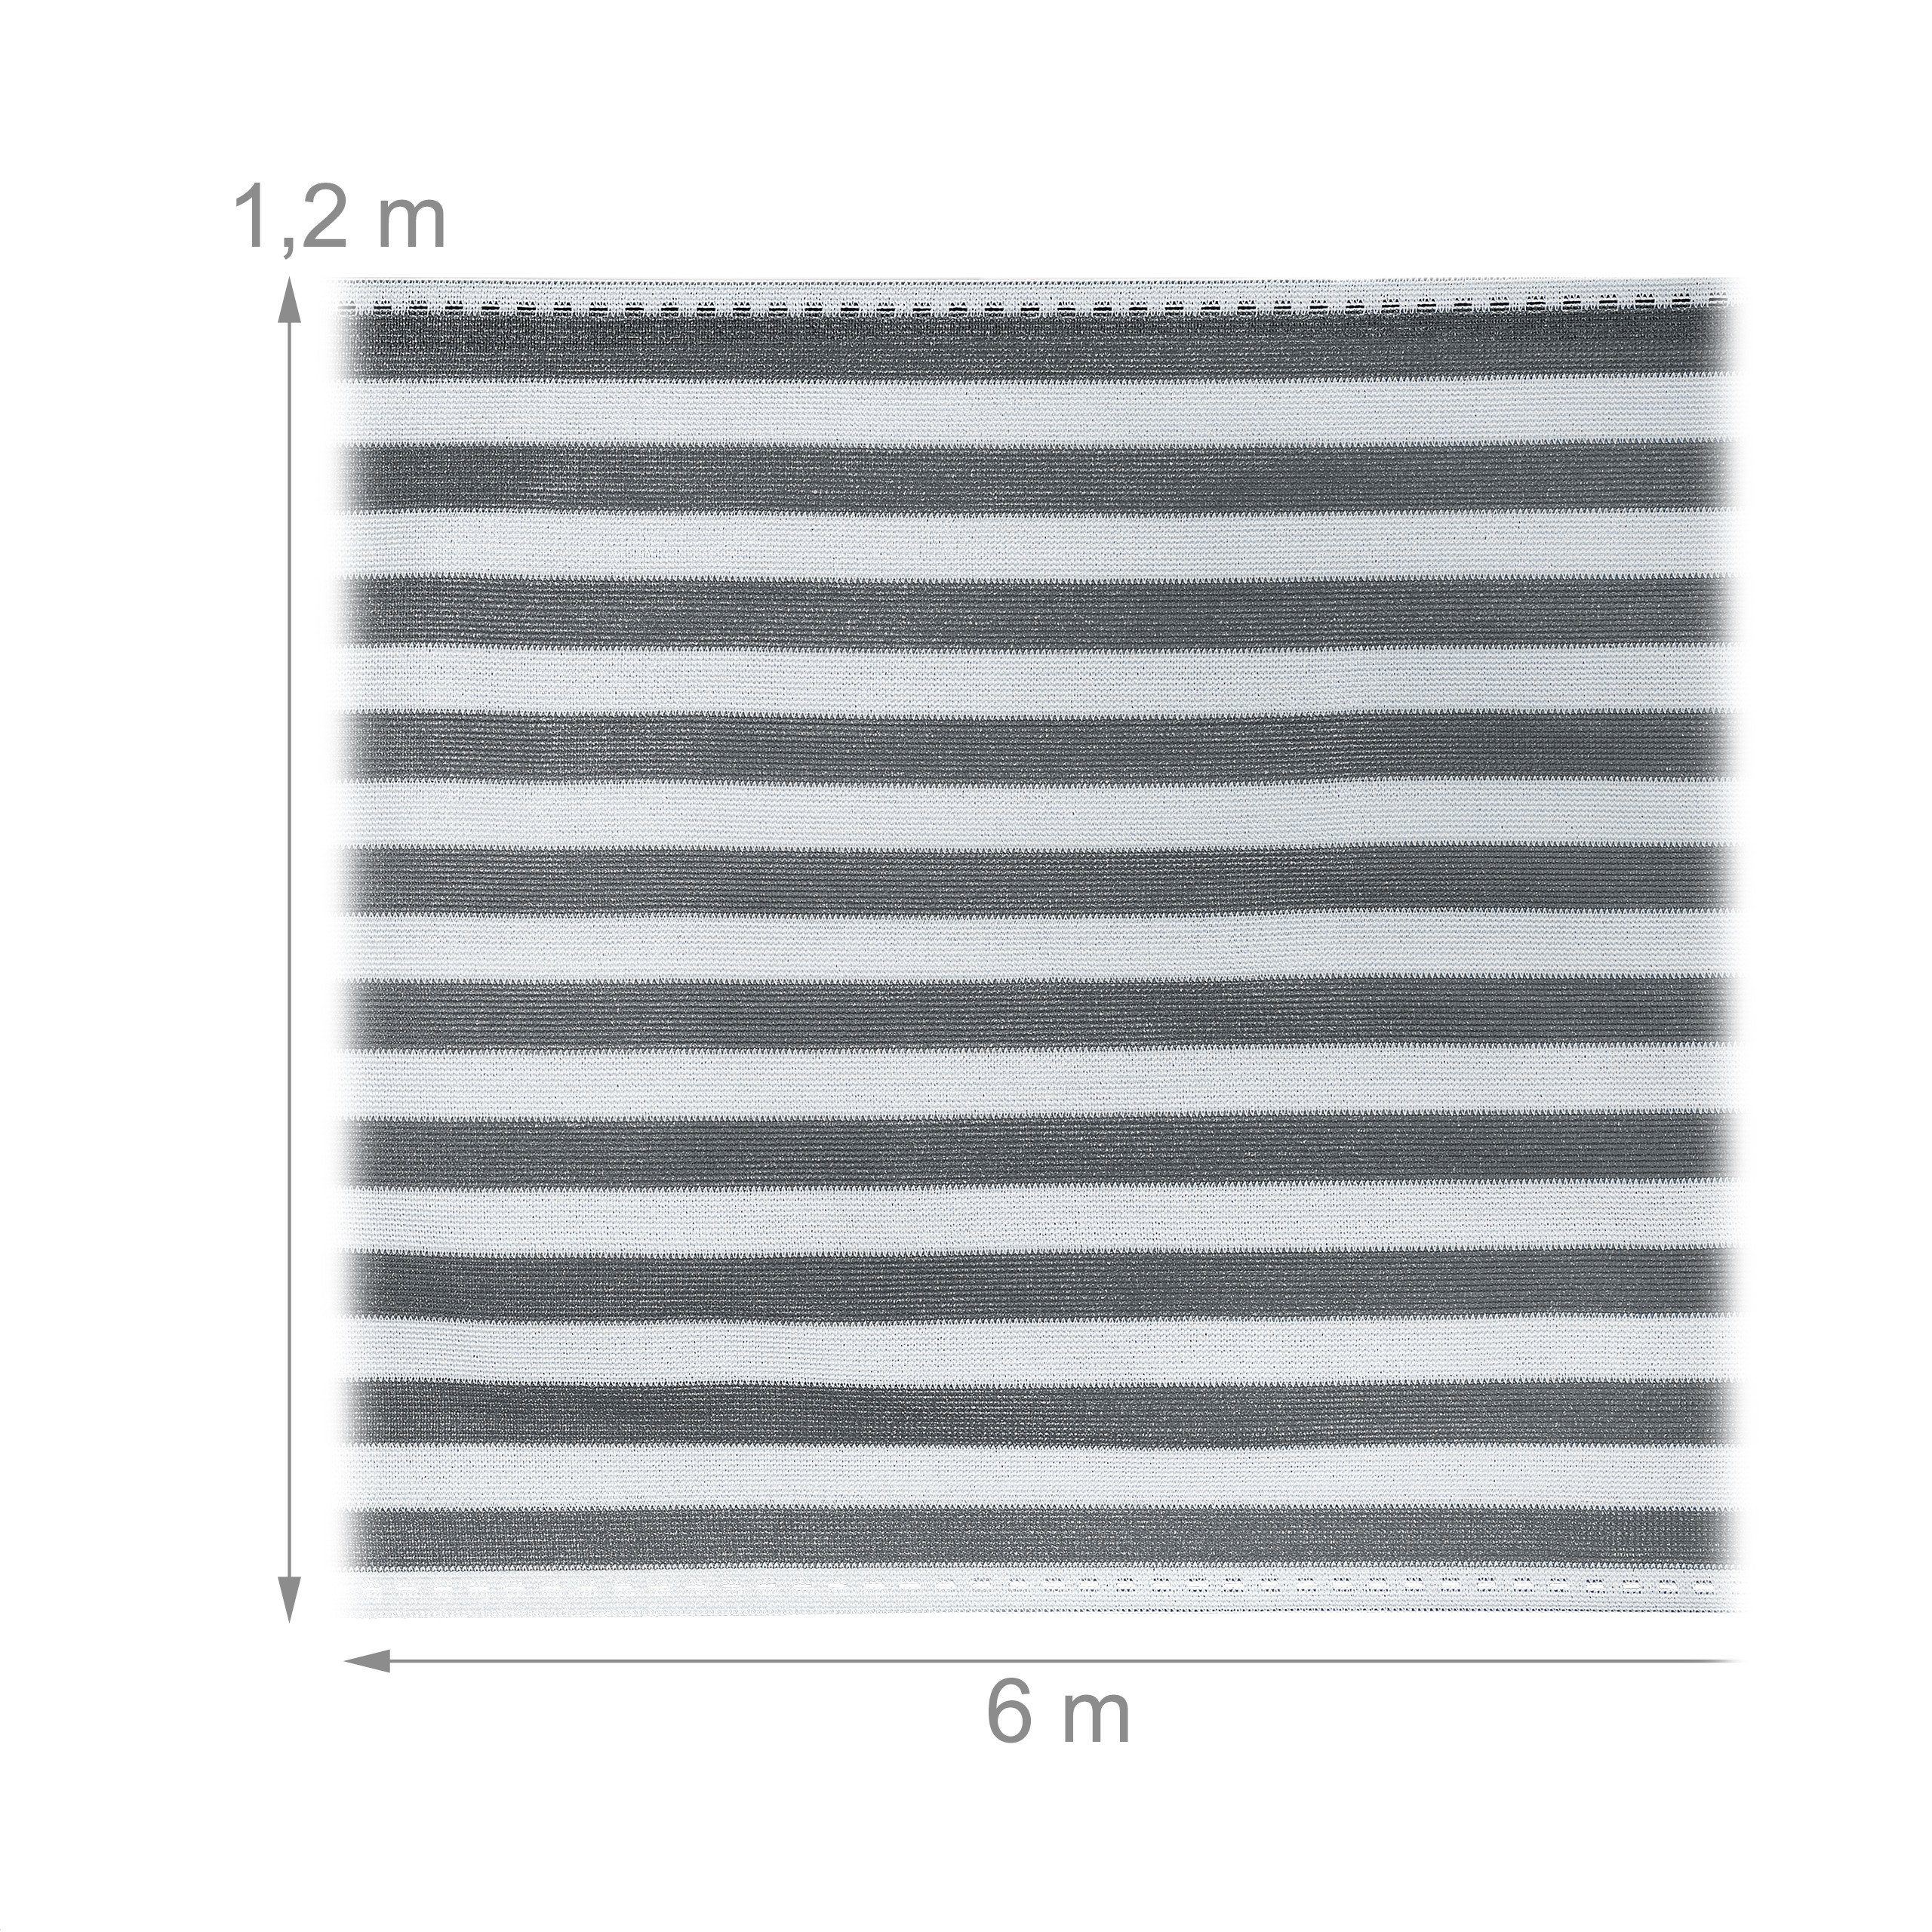 1,2 x Meter grau-weiß Blende relaxdays 1,2 gestreift, Zaunblende 6 m